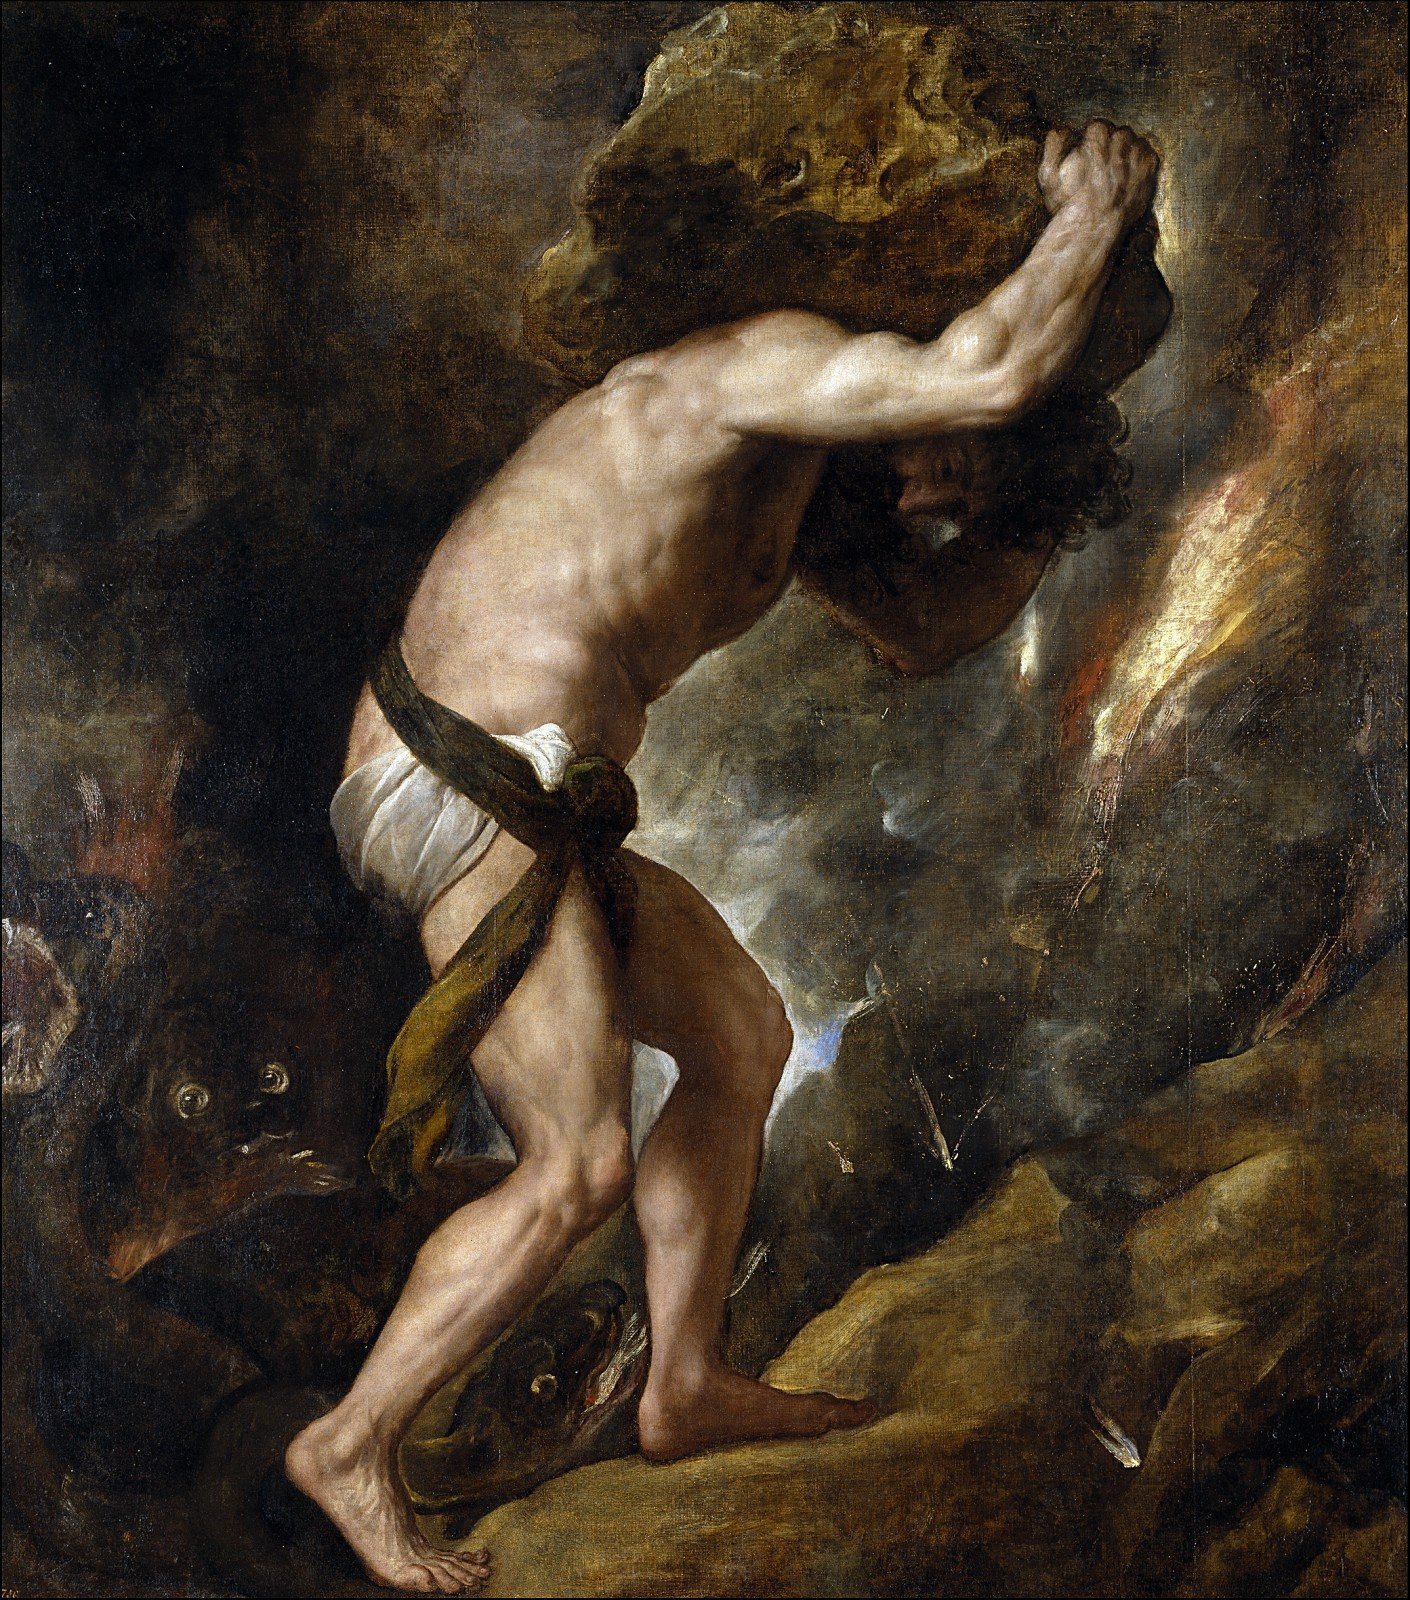 “Sisyphus”, Titian, Oil on canvas, 237 x 216 cm, Madrid, Museo Nacional del Prado